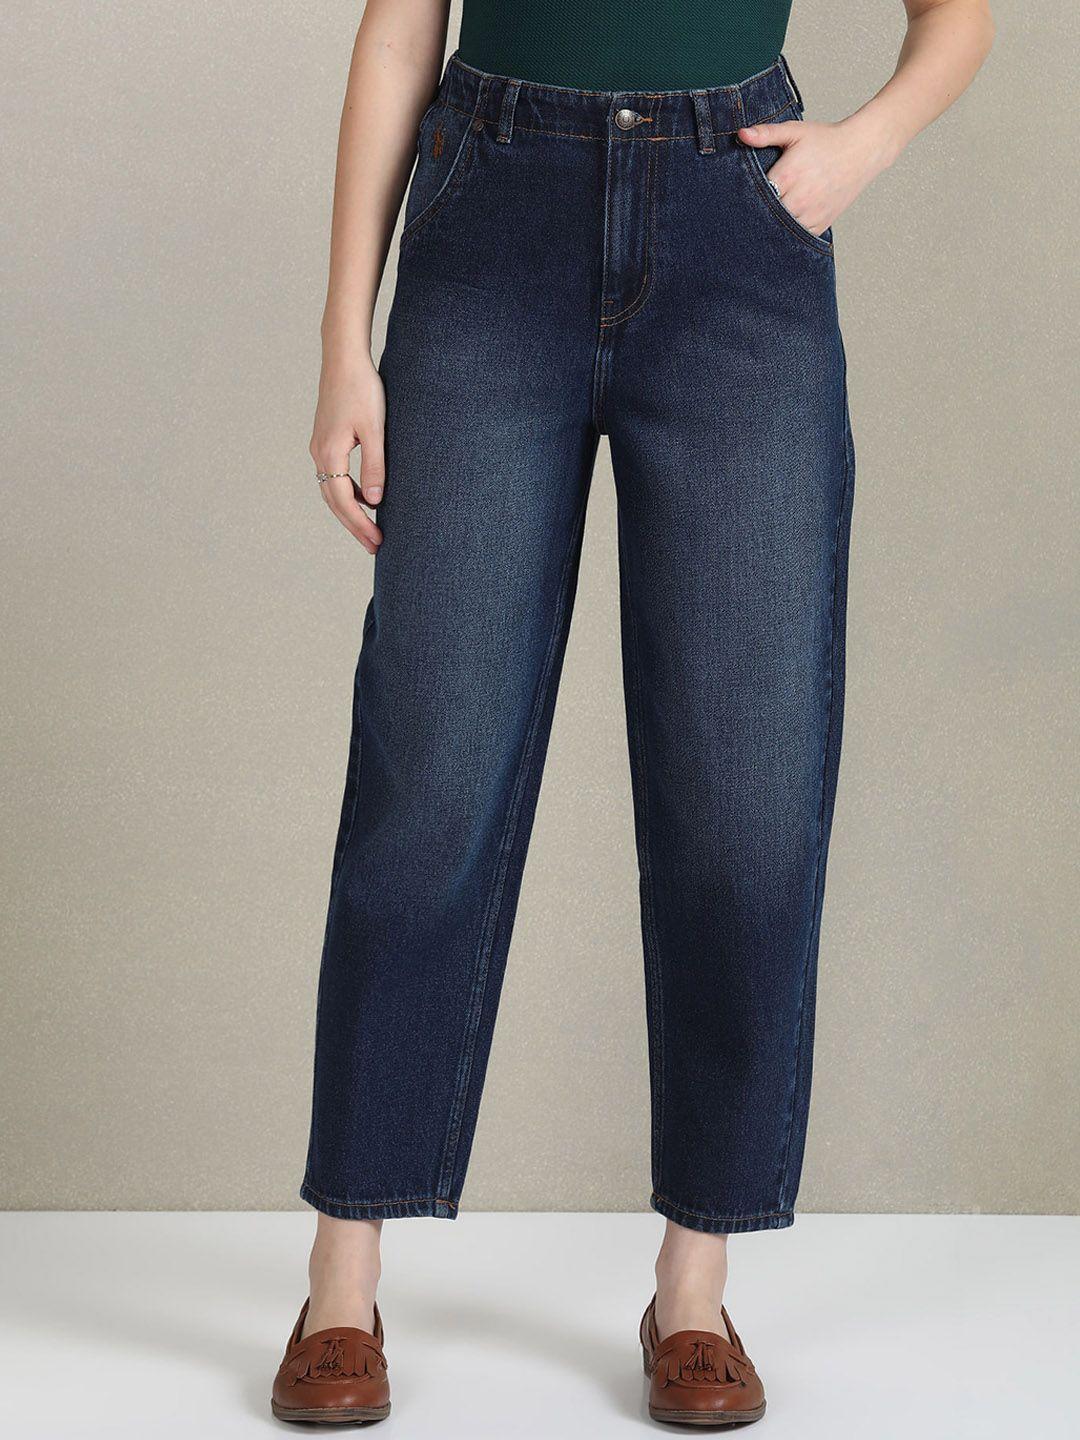 u.s. polo assn. women slouchy fit high-rise light fade cotton jeans